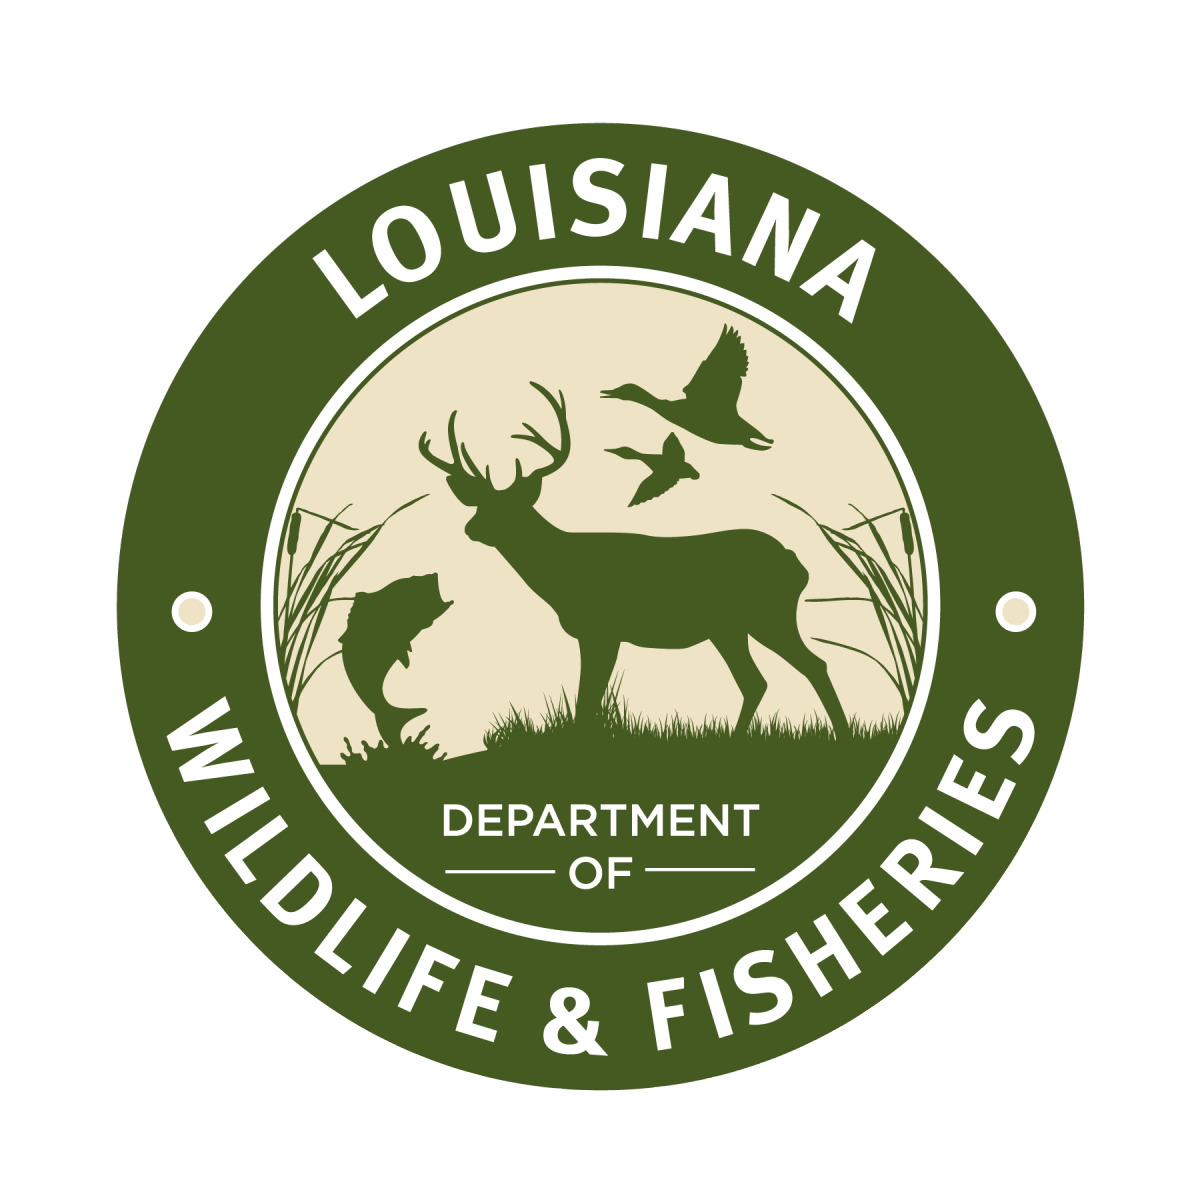 The Louisiana Logo - logo. Louisiana Department of Wildlife and Fisheries